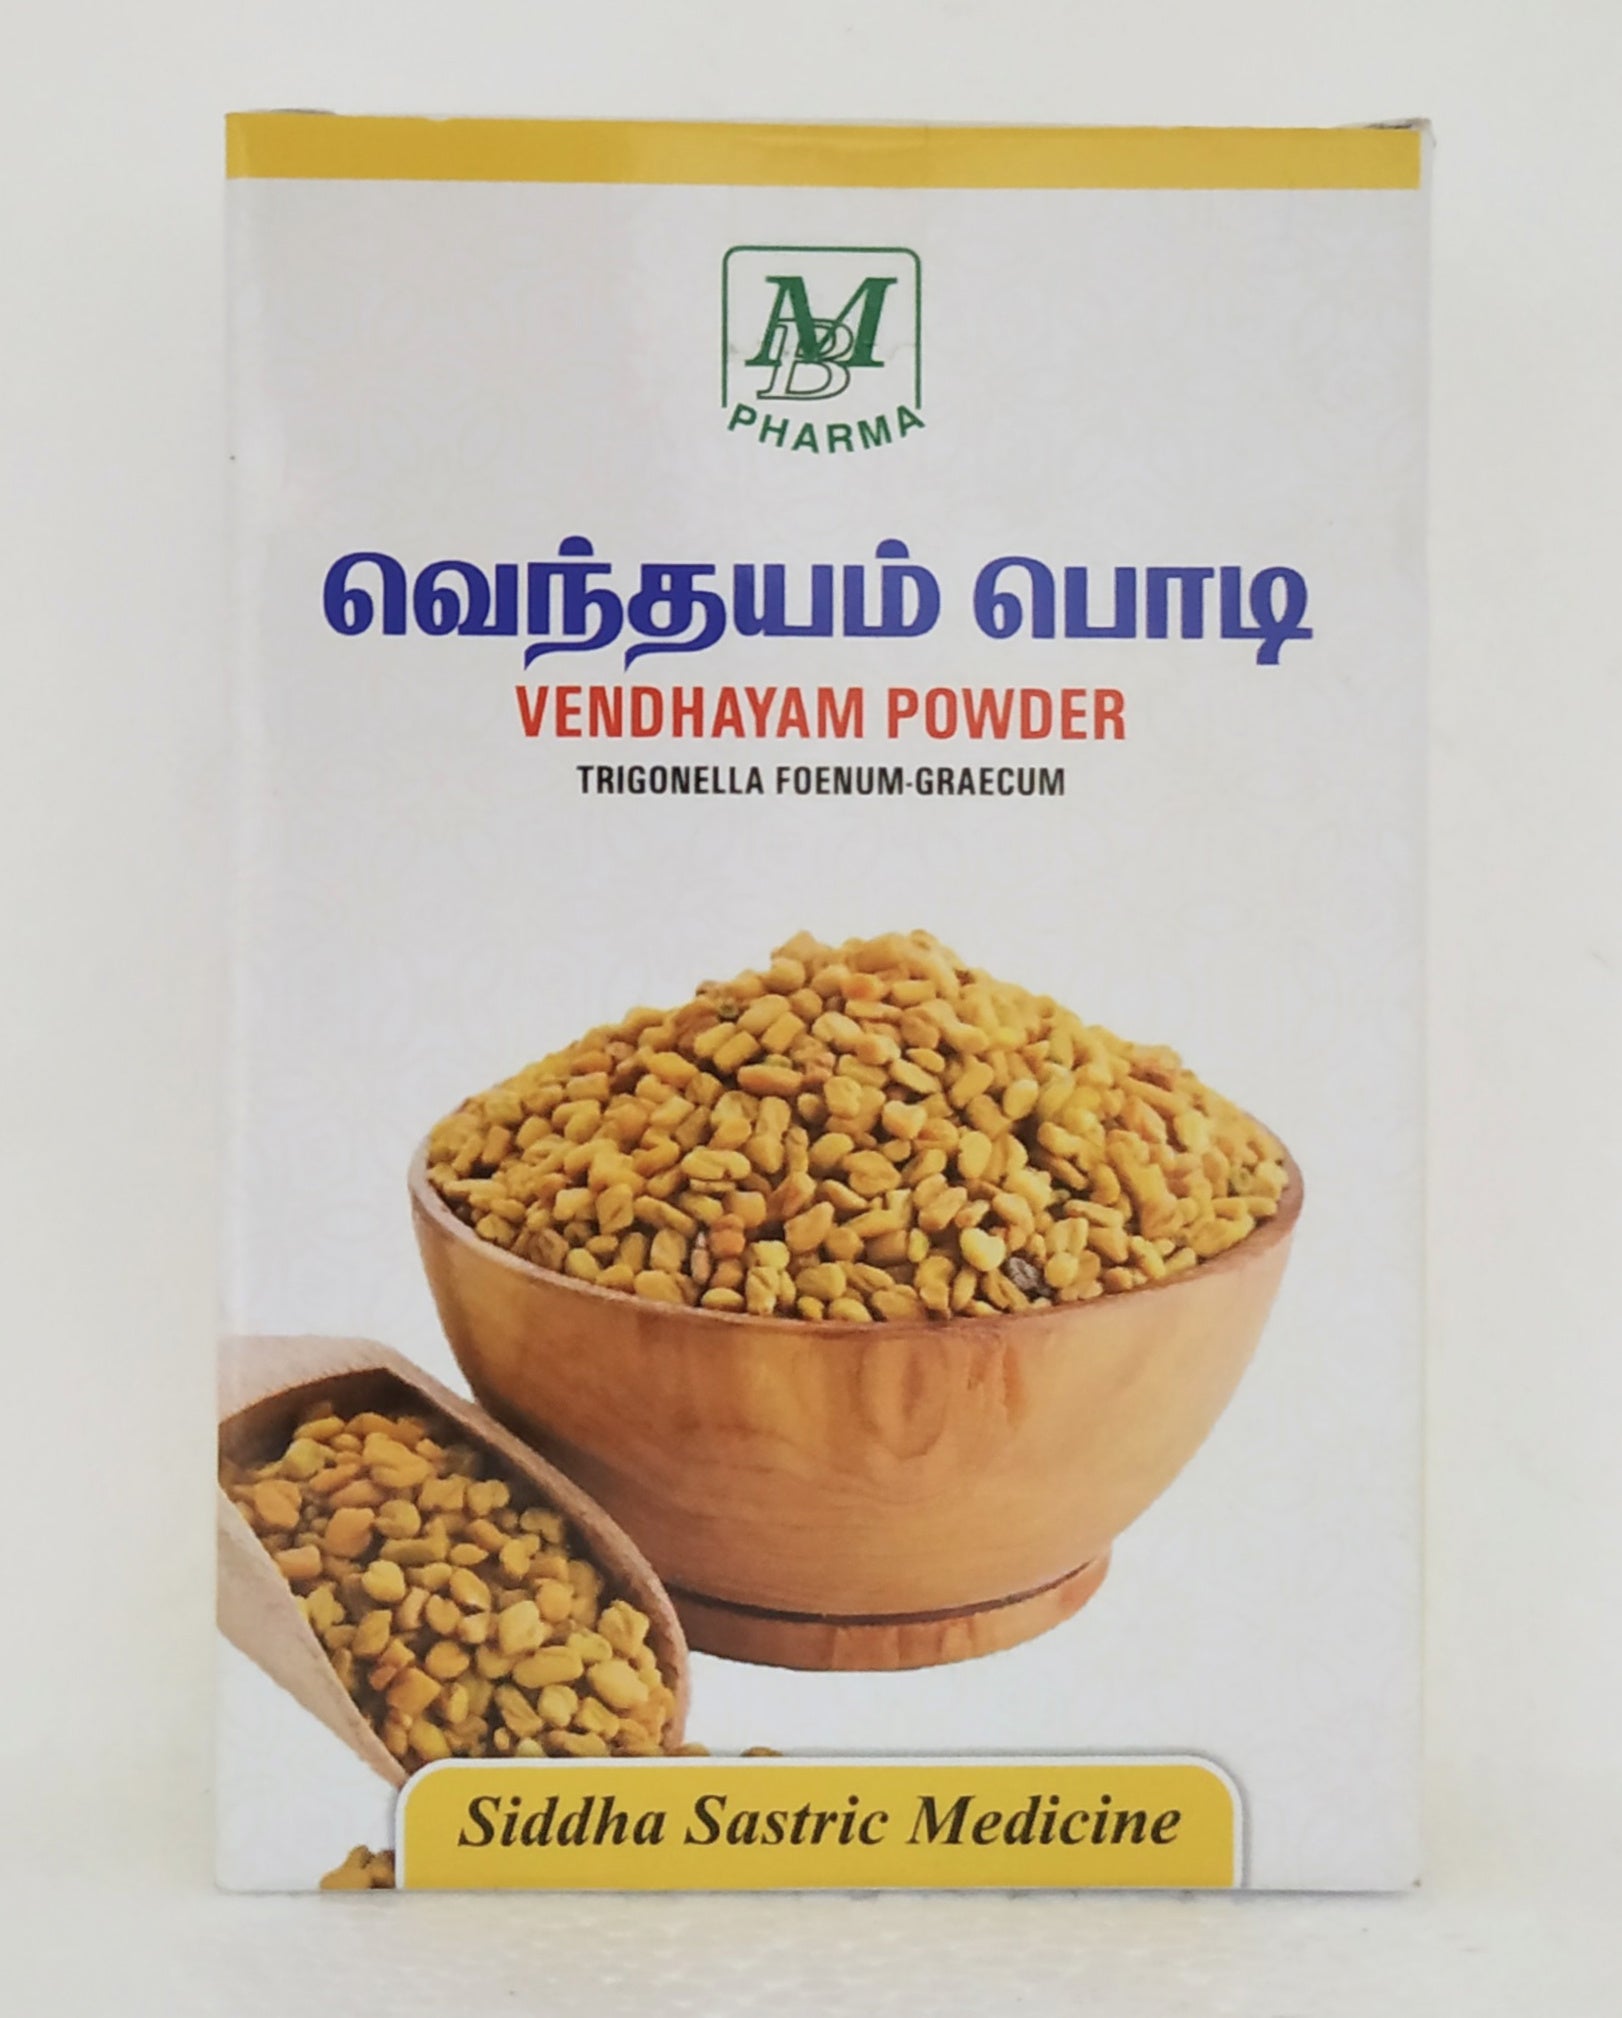 Shop Vendhayam powder 50gm at price 36.00 from MB Pharma Online - Ayush Care